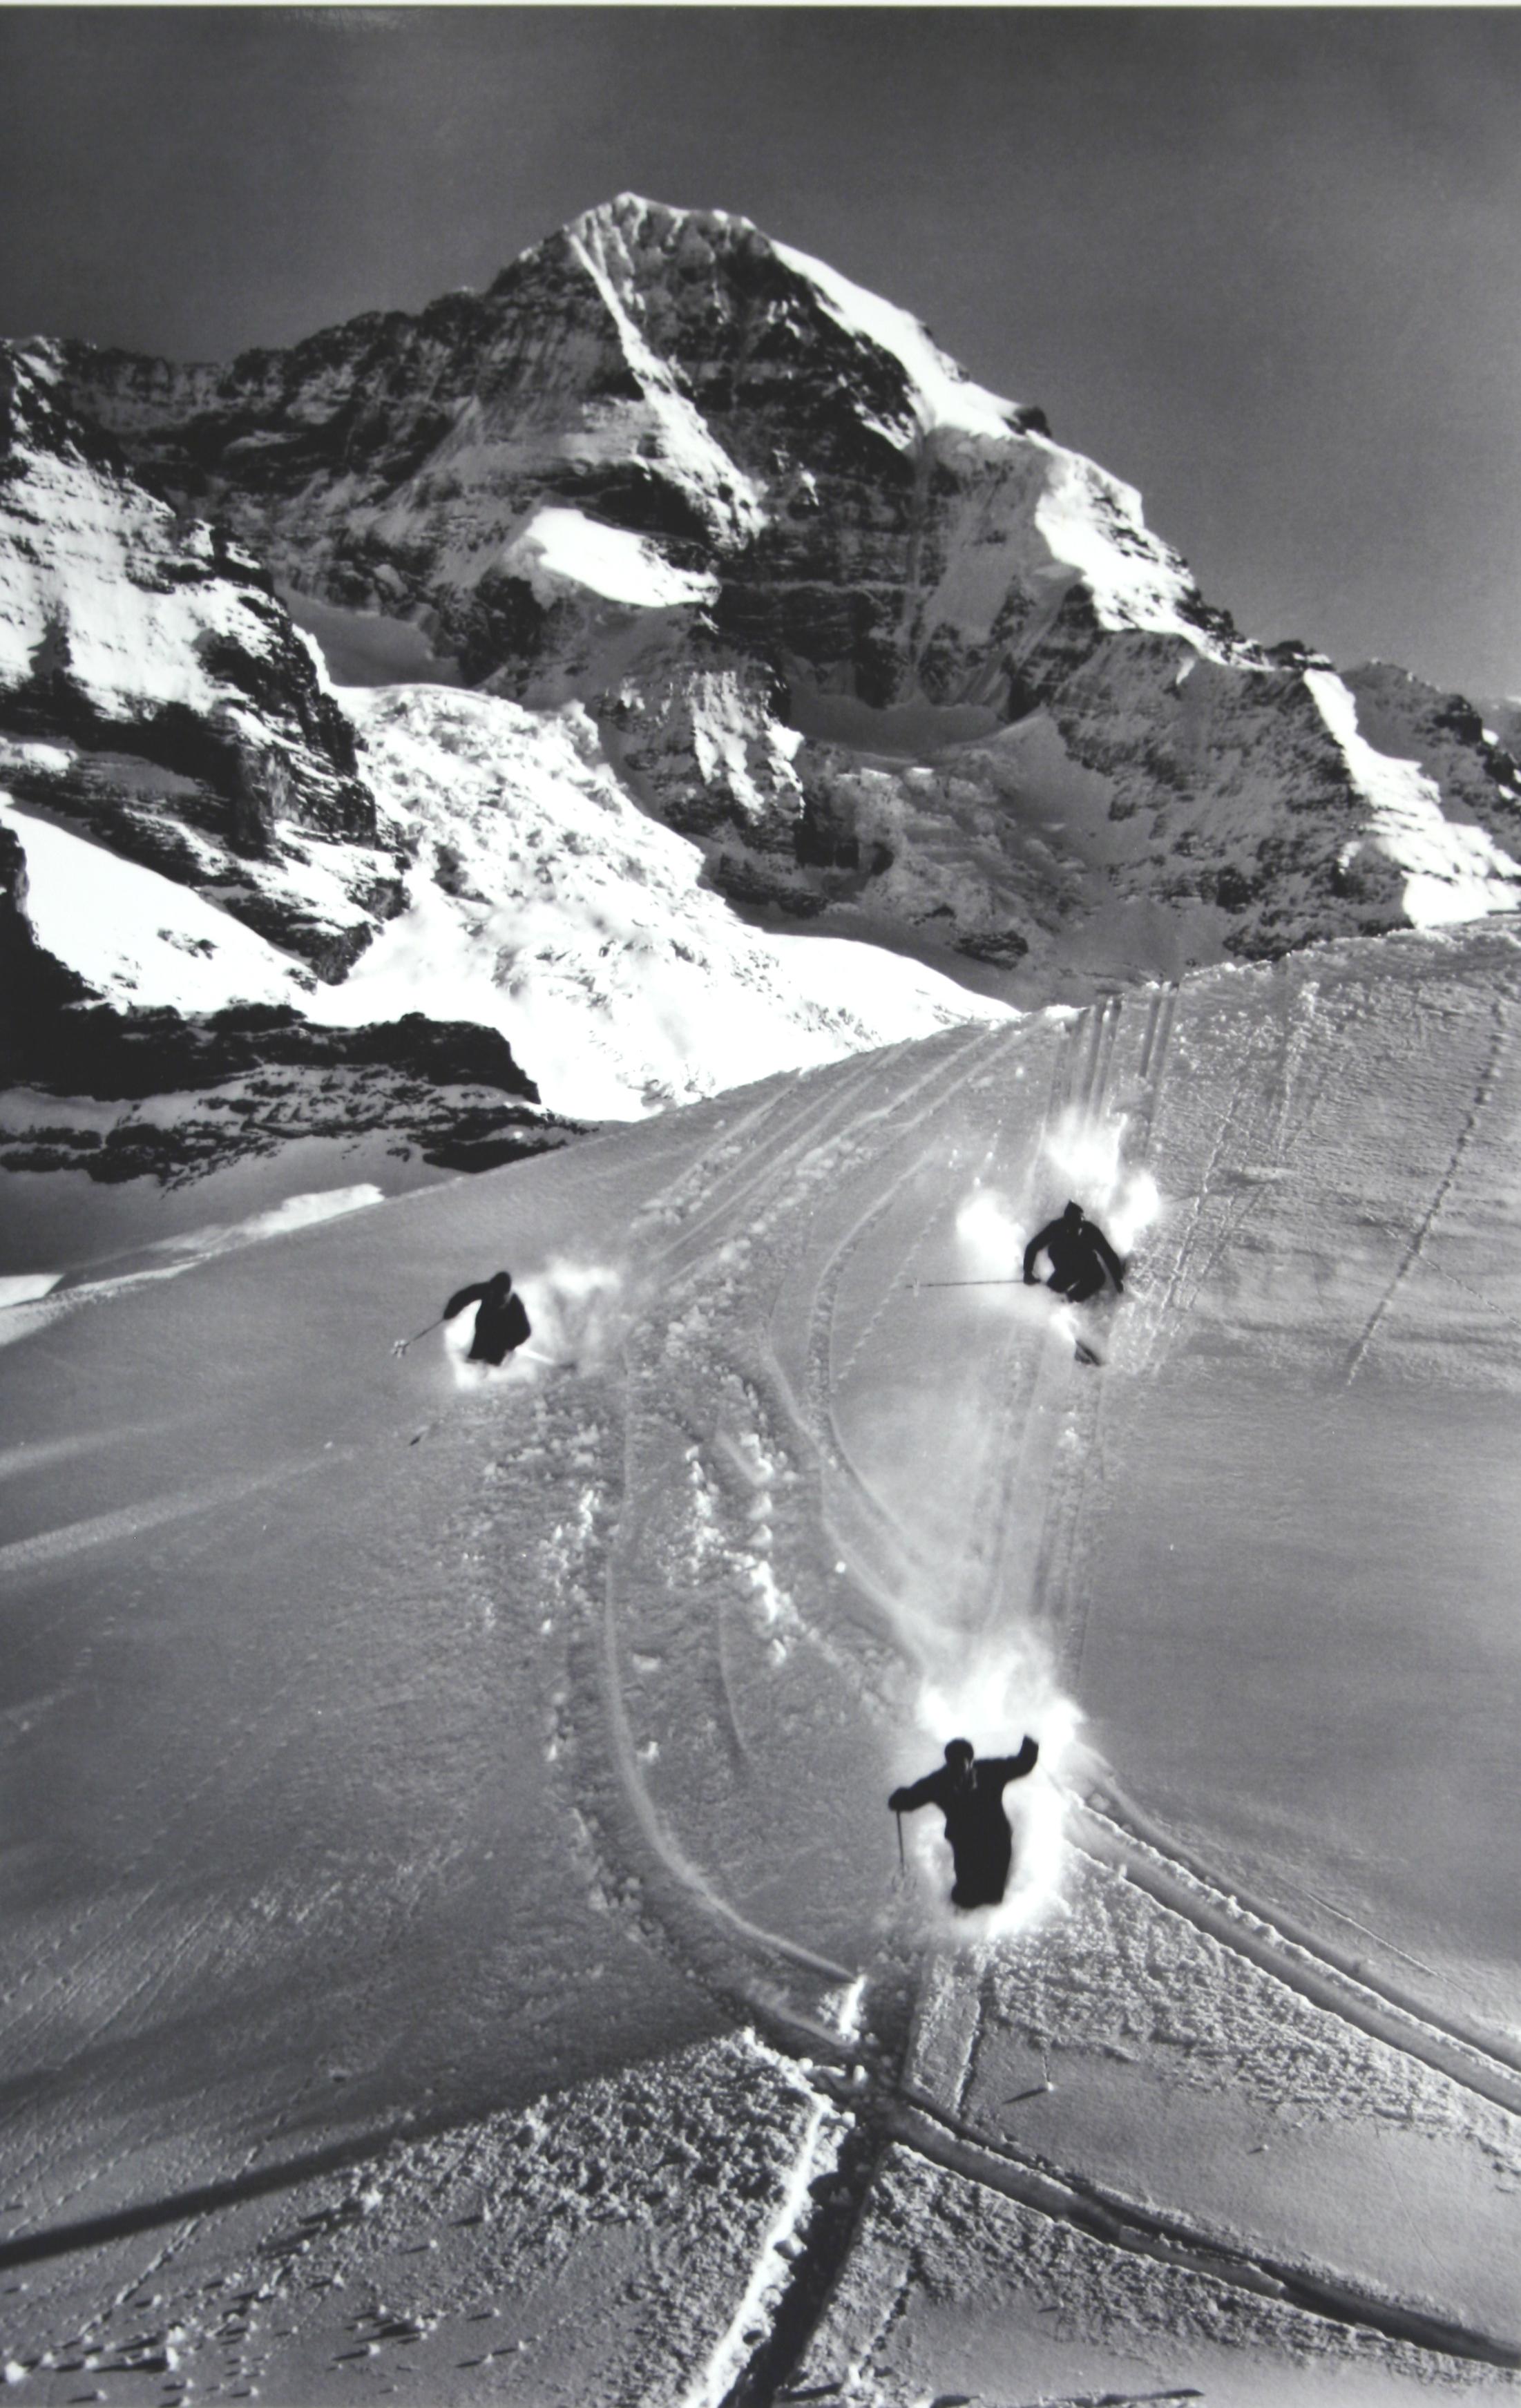 Sporting Art Alpine Ski Photograph, 'Scheidegg' Taken from Original 1930s Photograph For Sale